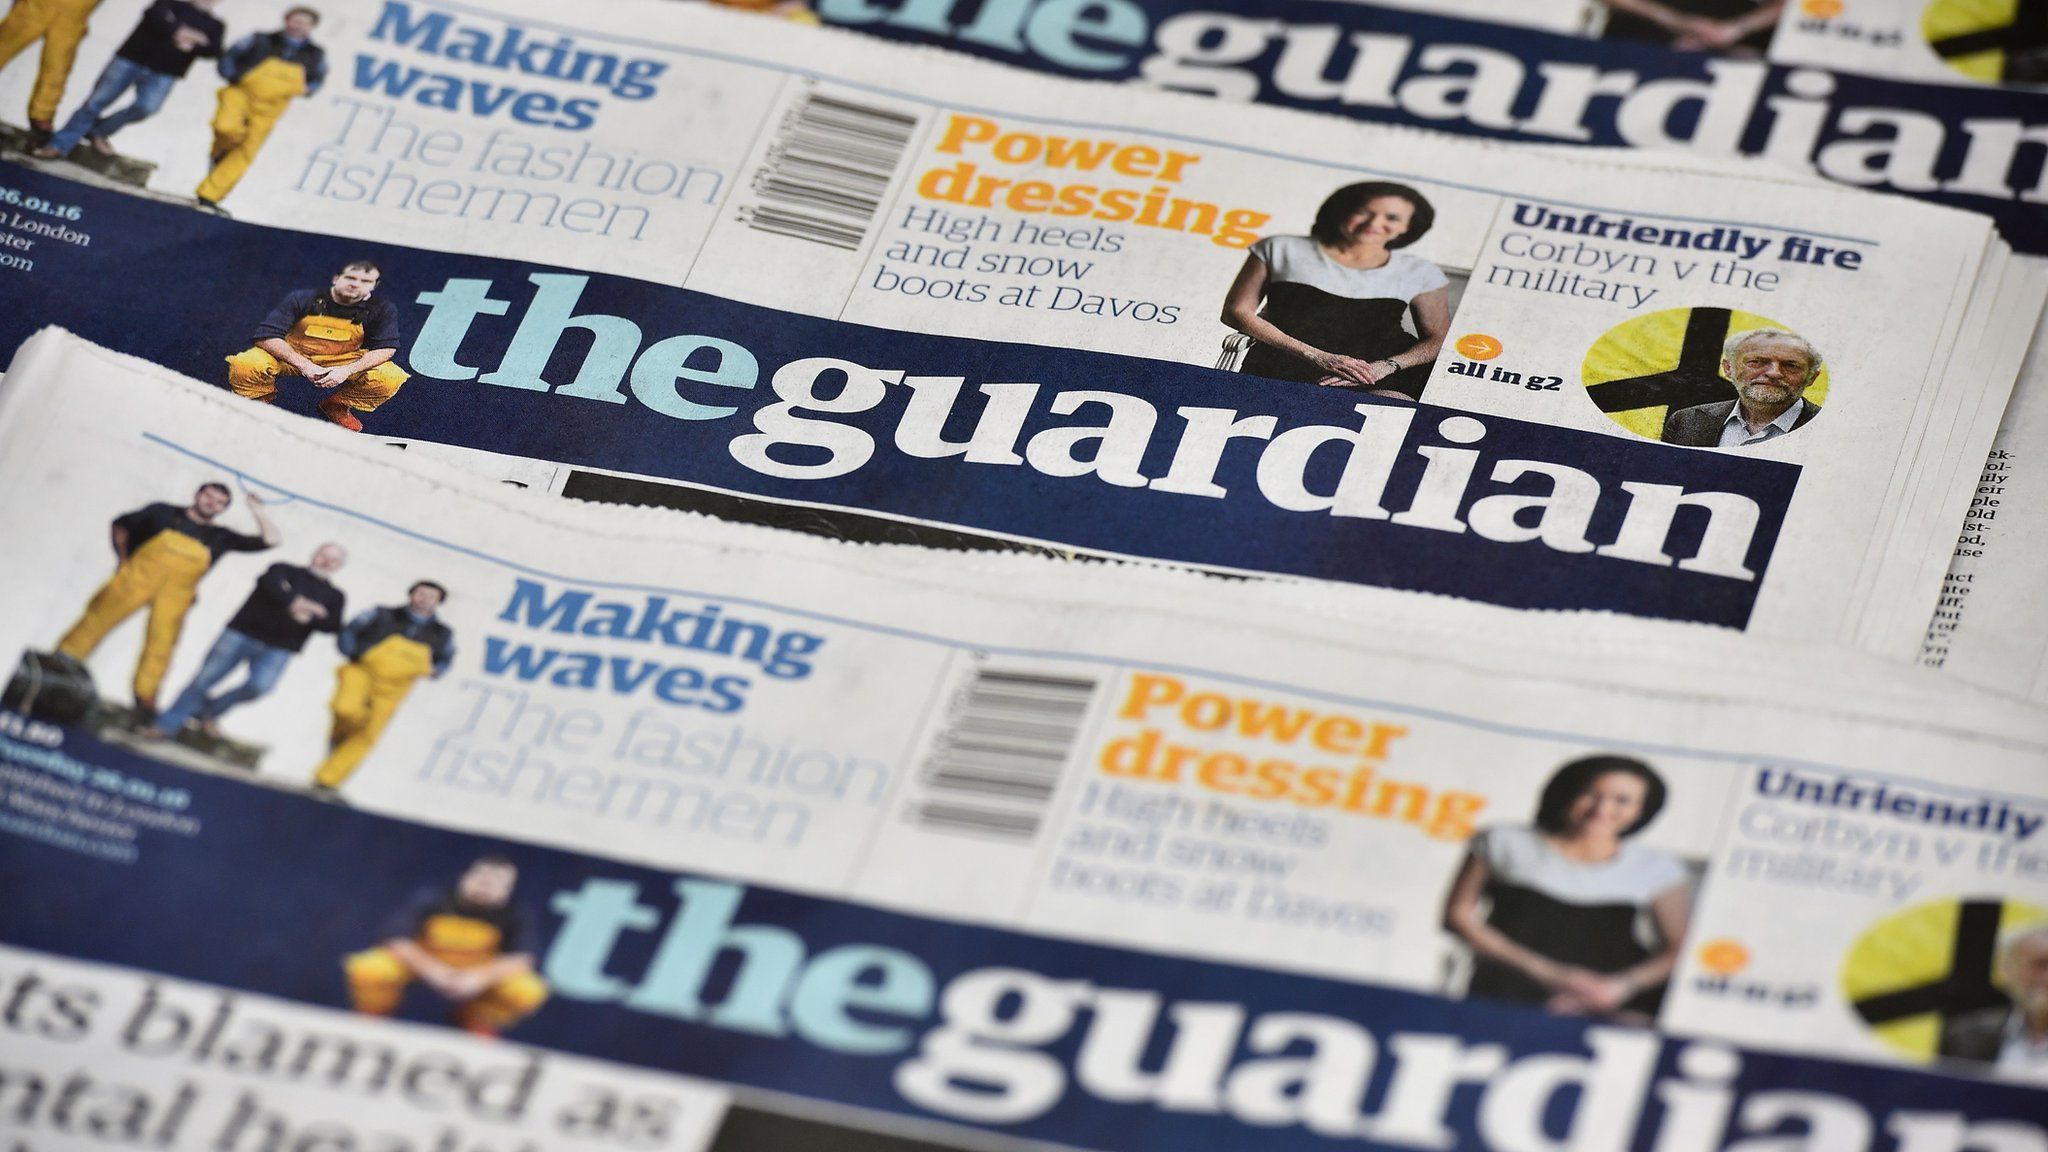 Guardian newspaper